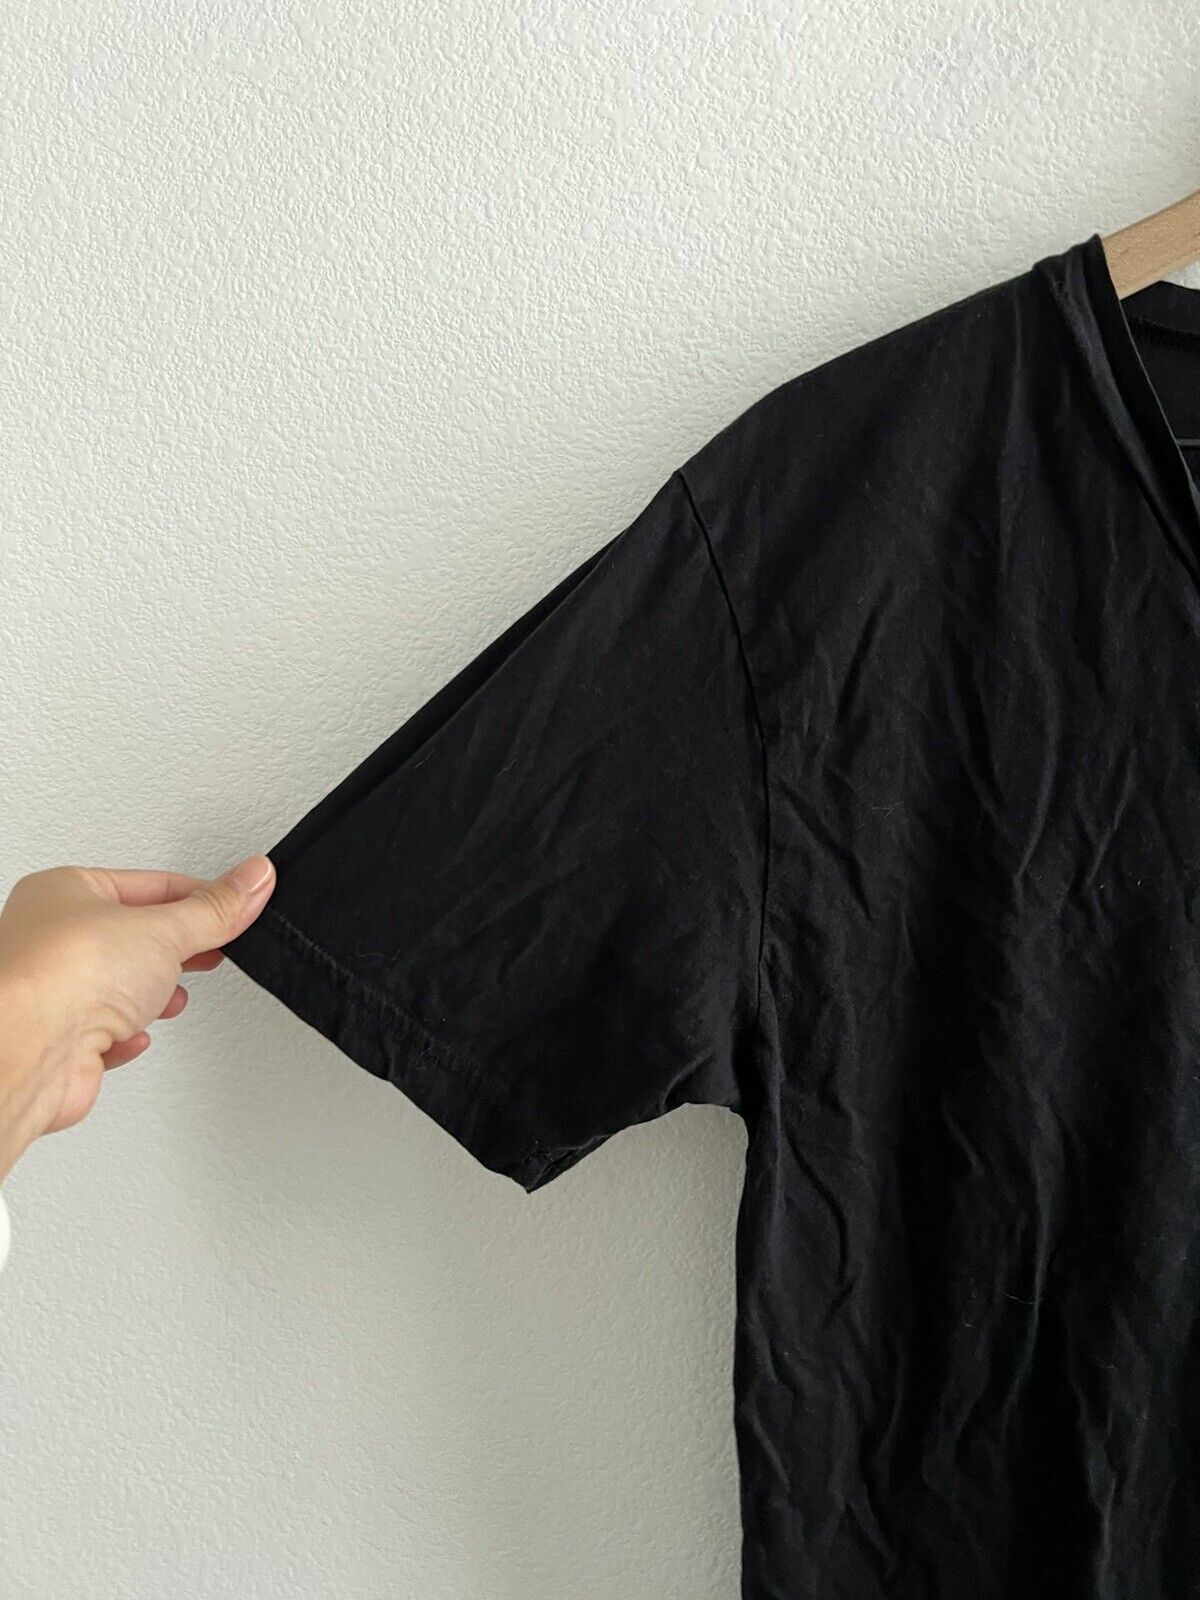 LNA California Black Vneck Tshirt Size Large - image 3